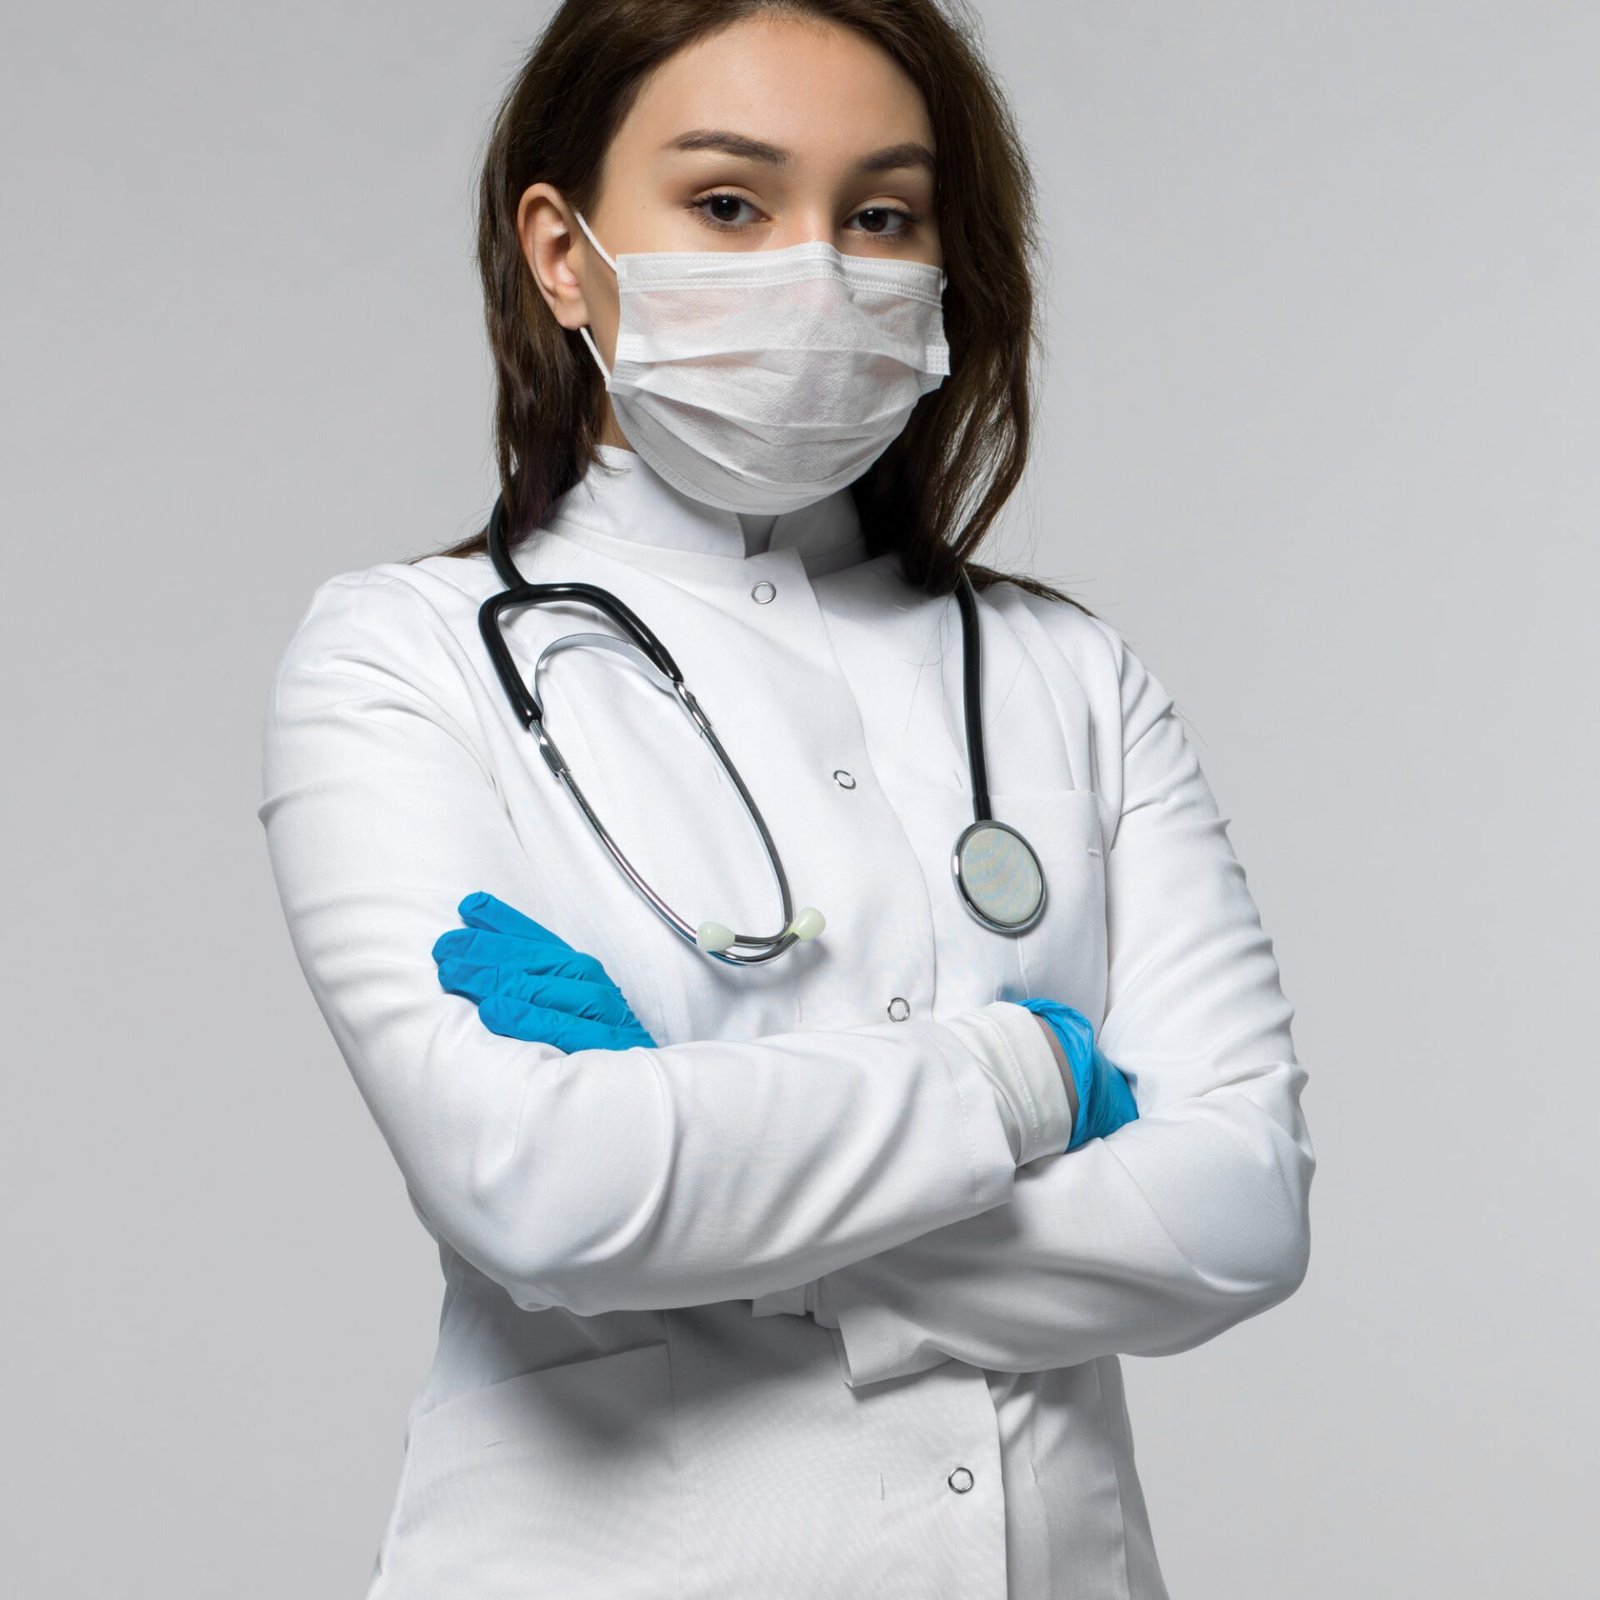 nurse-with-stethoscope-white-medical-uniform-white-protective-sterile-mask